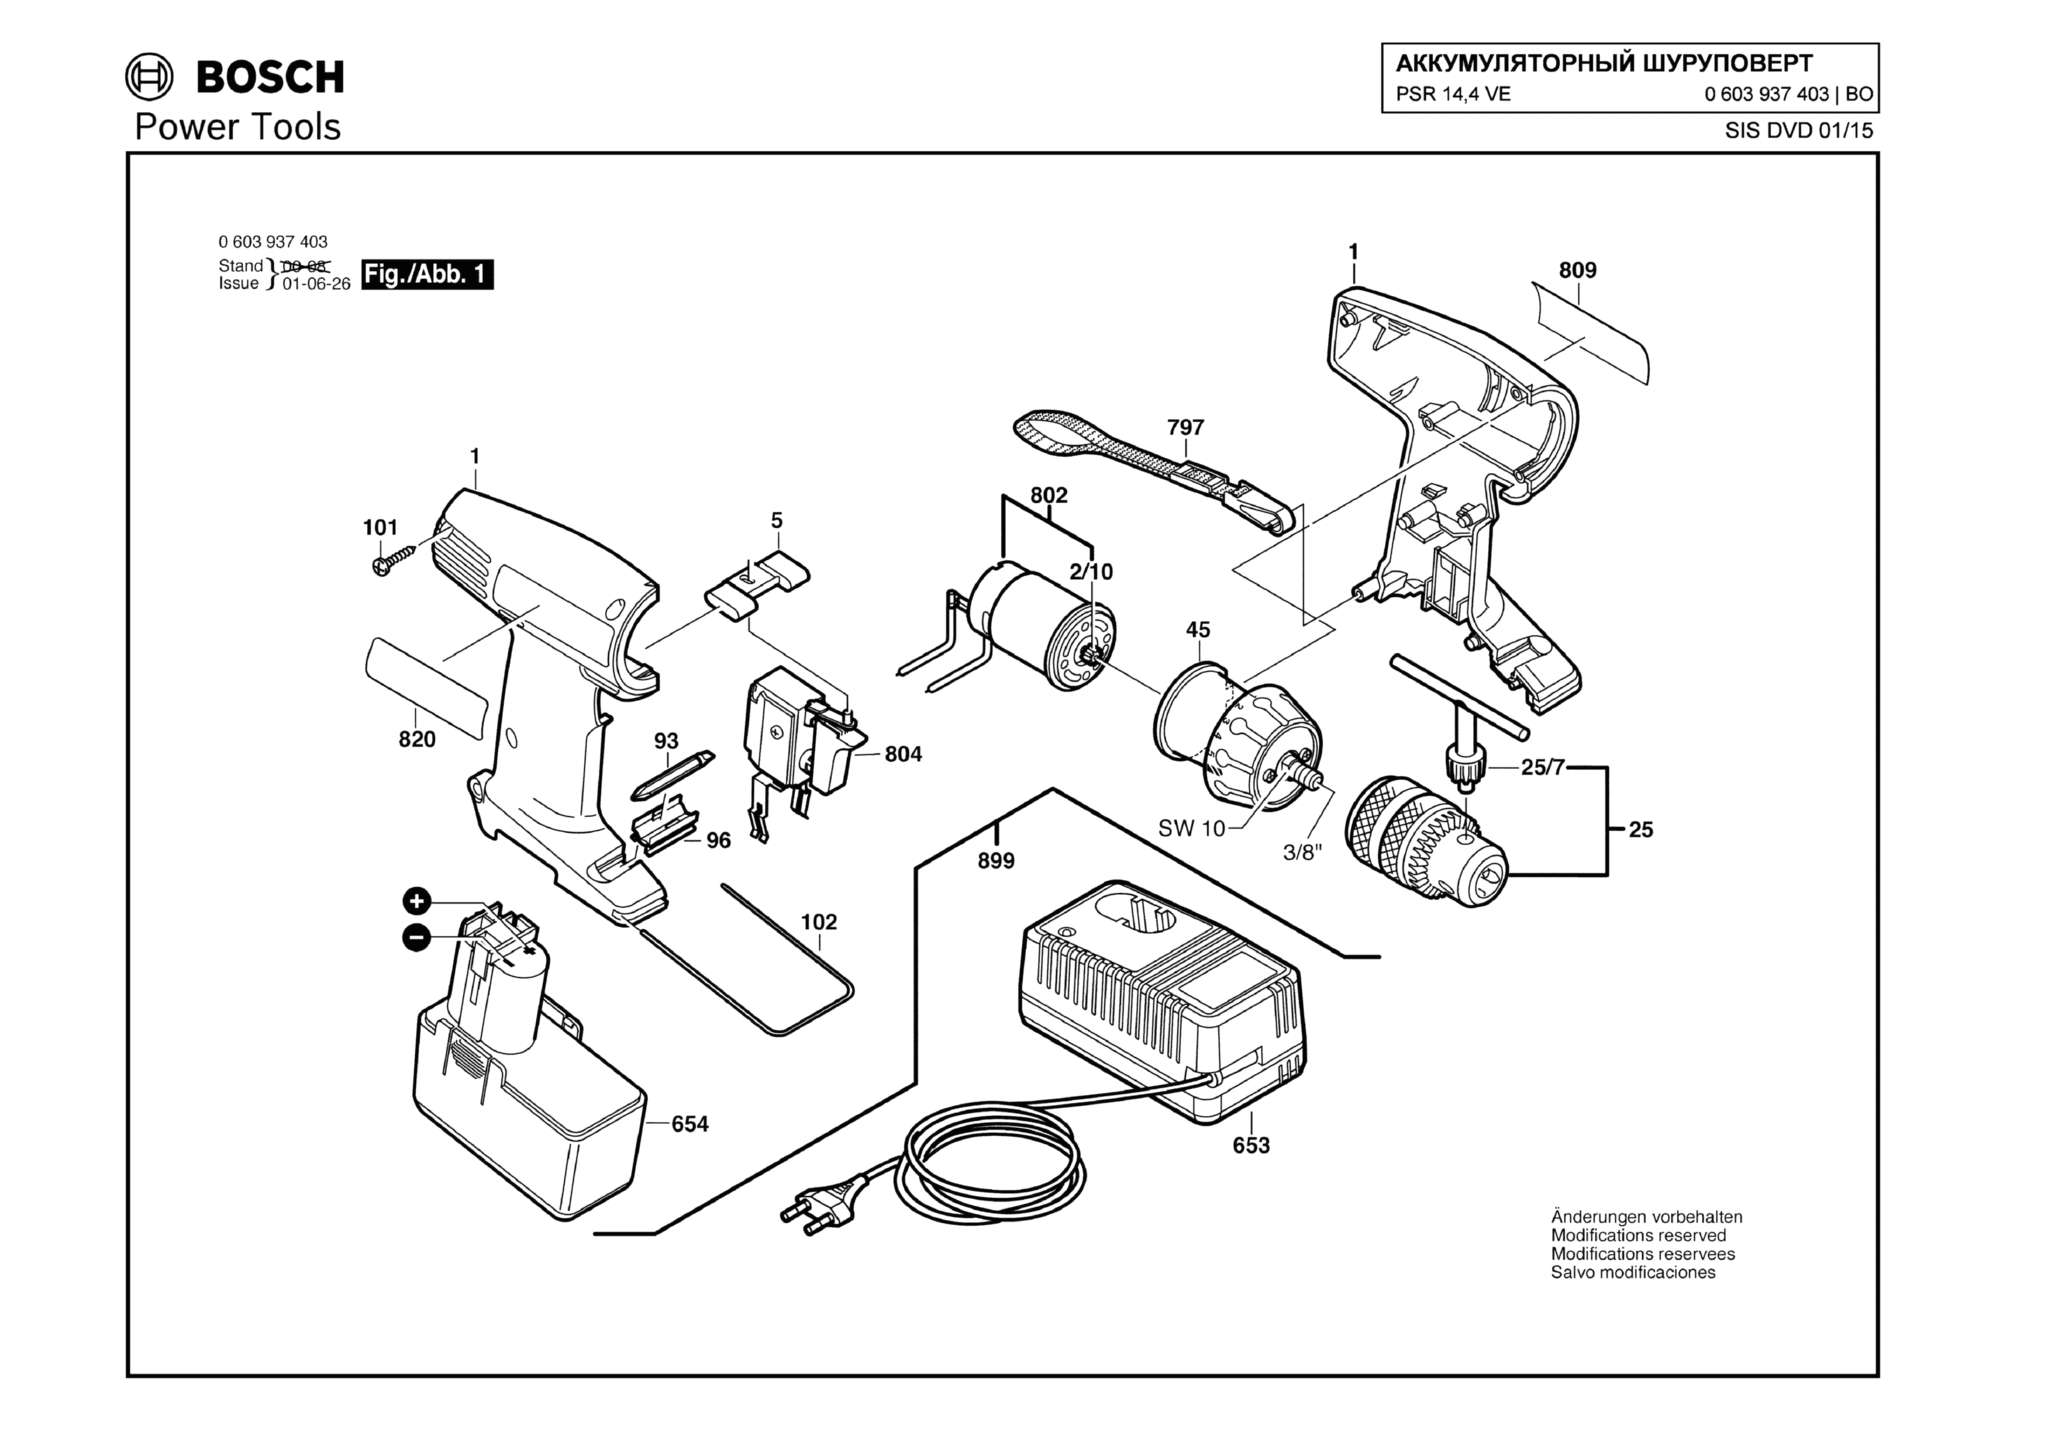 Запчасти, схема и деталировка Bosch PSR 14,4 VE (ТИП 0603937403)